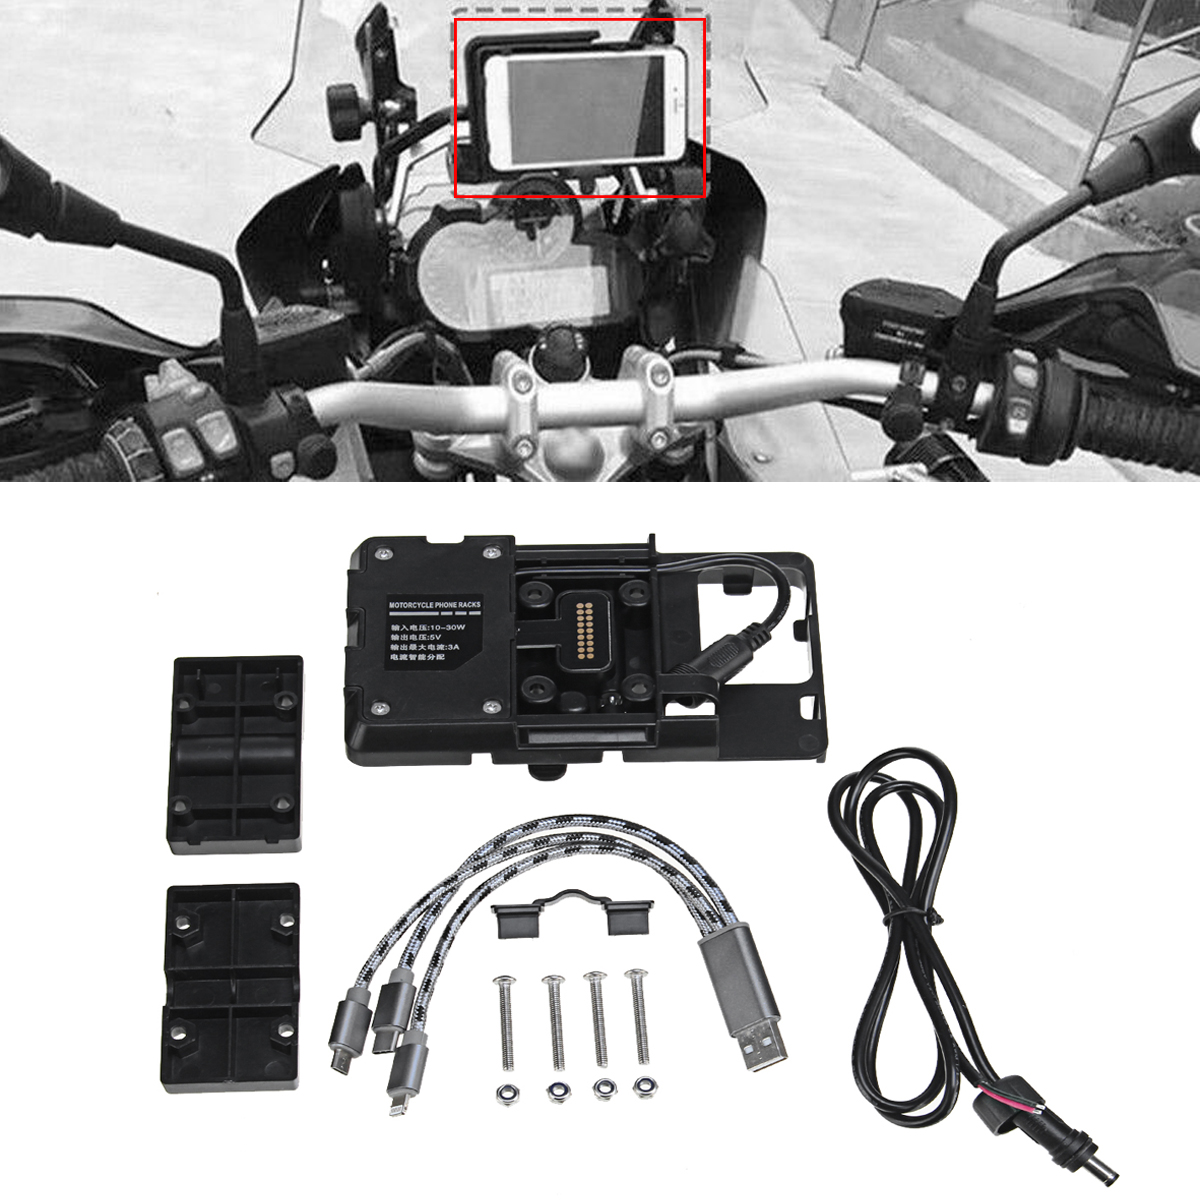 

USB Charger Mobile Phone Holder GPS Navigation Bracket For BMW R1200GS ADV S1000R S1000XR R1200R F700 800GS/Honda CRF1000 Motorcycle